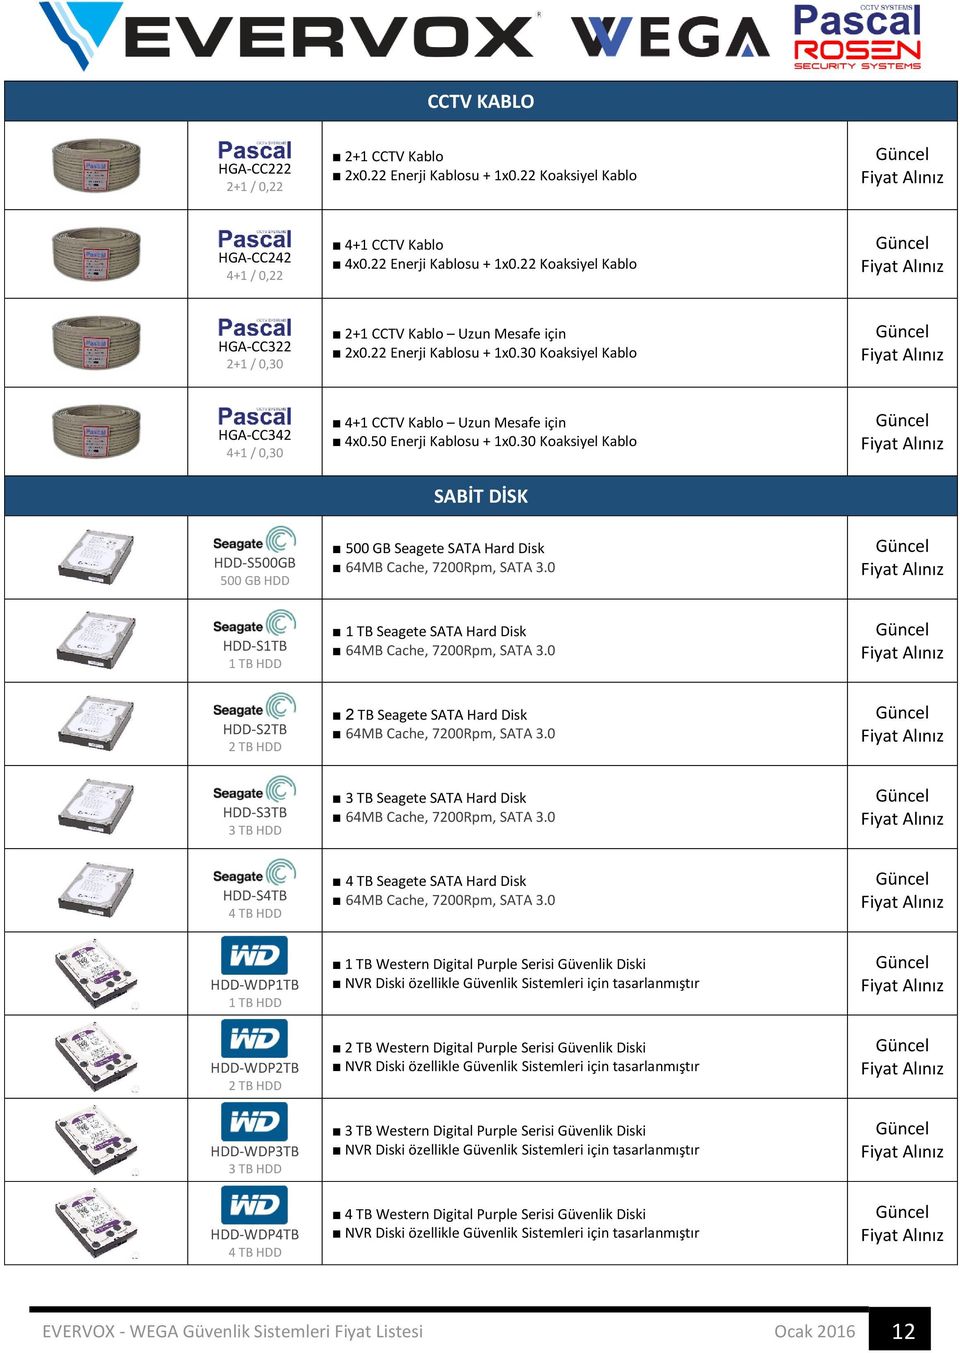 30 Koaksiyel Kablo SABİT DİSK HDD-S500GB 500 GB HDD 500 GB Seagete SATA Hard Disk 64MB Cache, 7200Rpm, SATA 3.0 HDD-S1TB 1 TB HDD 1 TB Seagete SATA Hard Disk 64MB Cache, 7200Rpm, SATA 3.